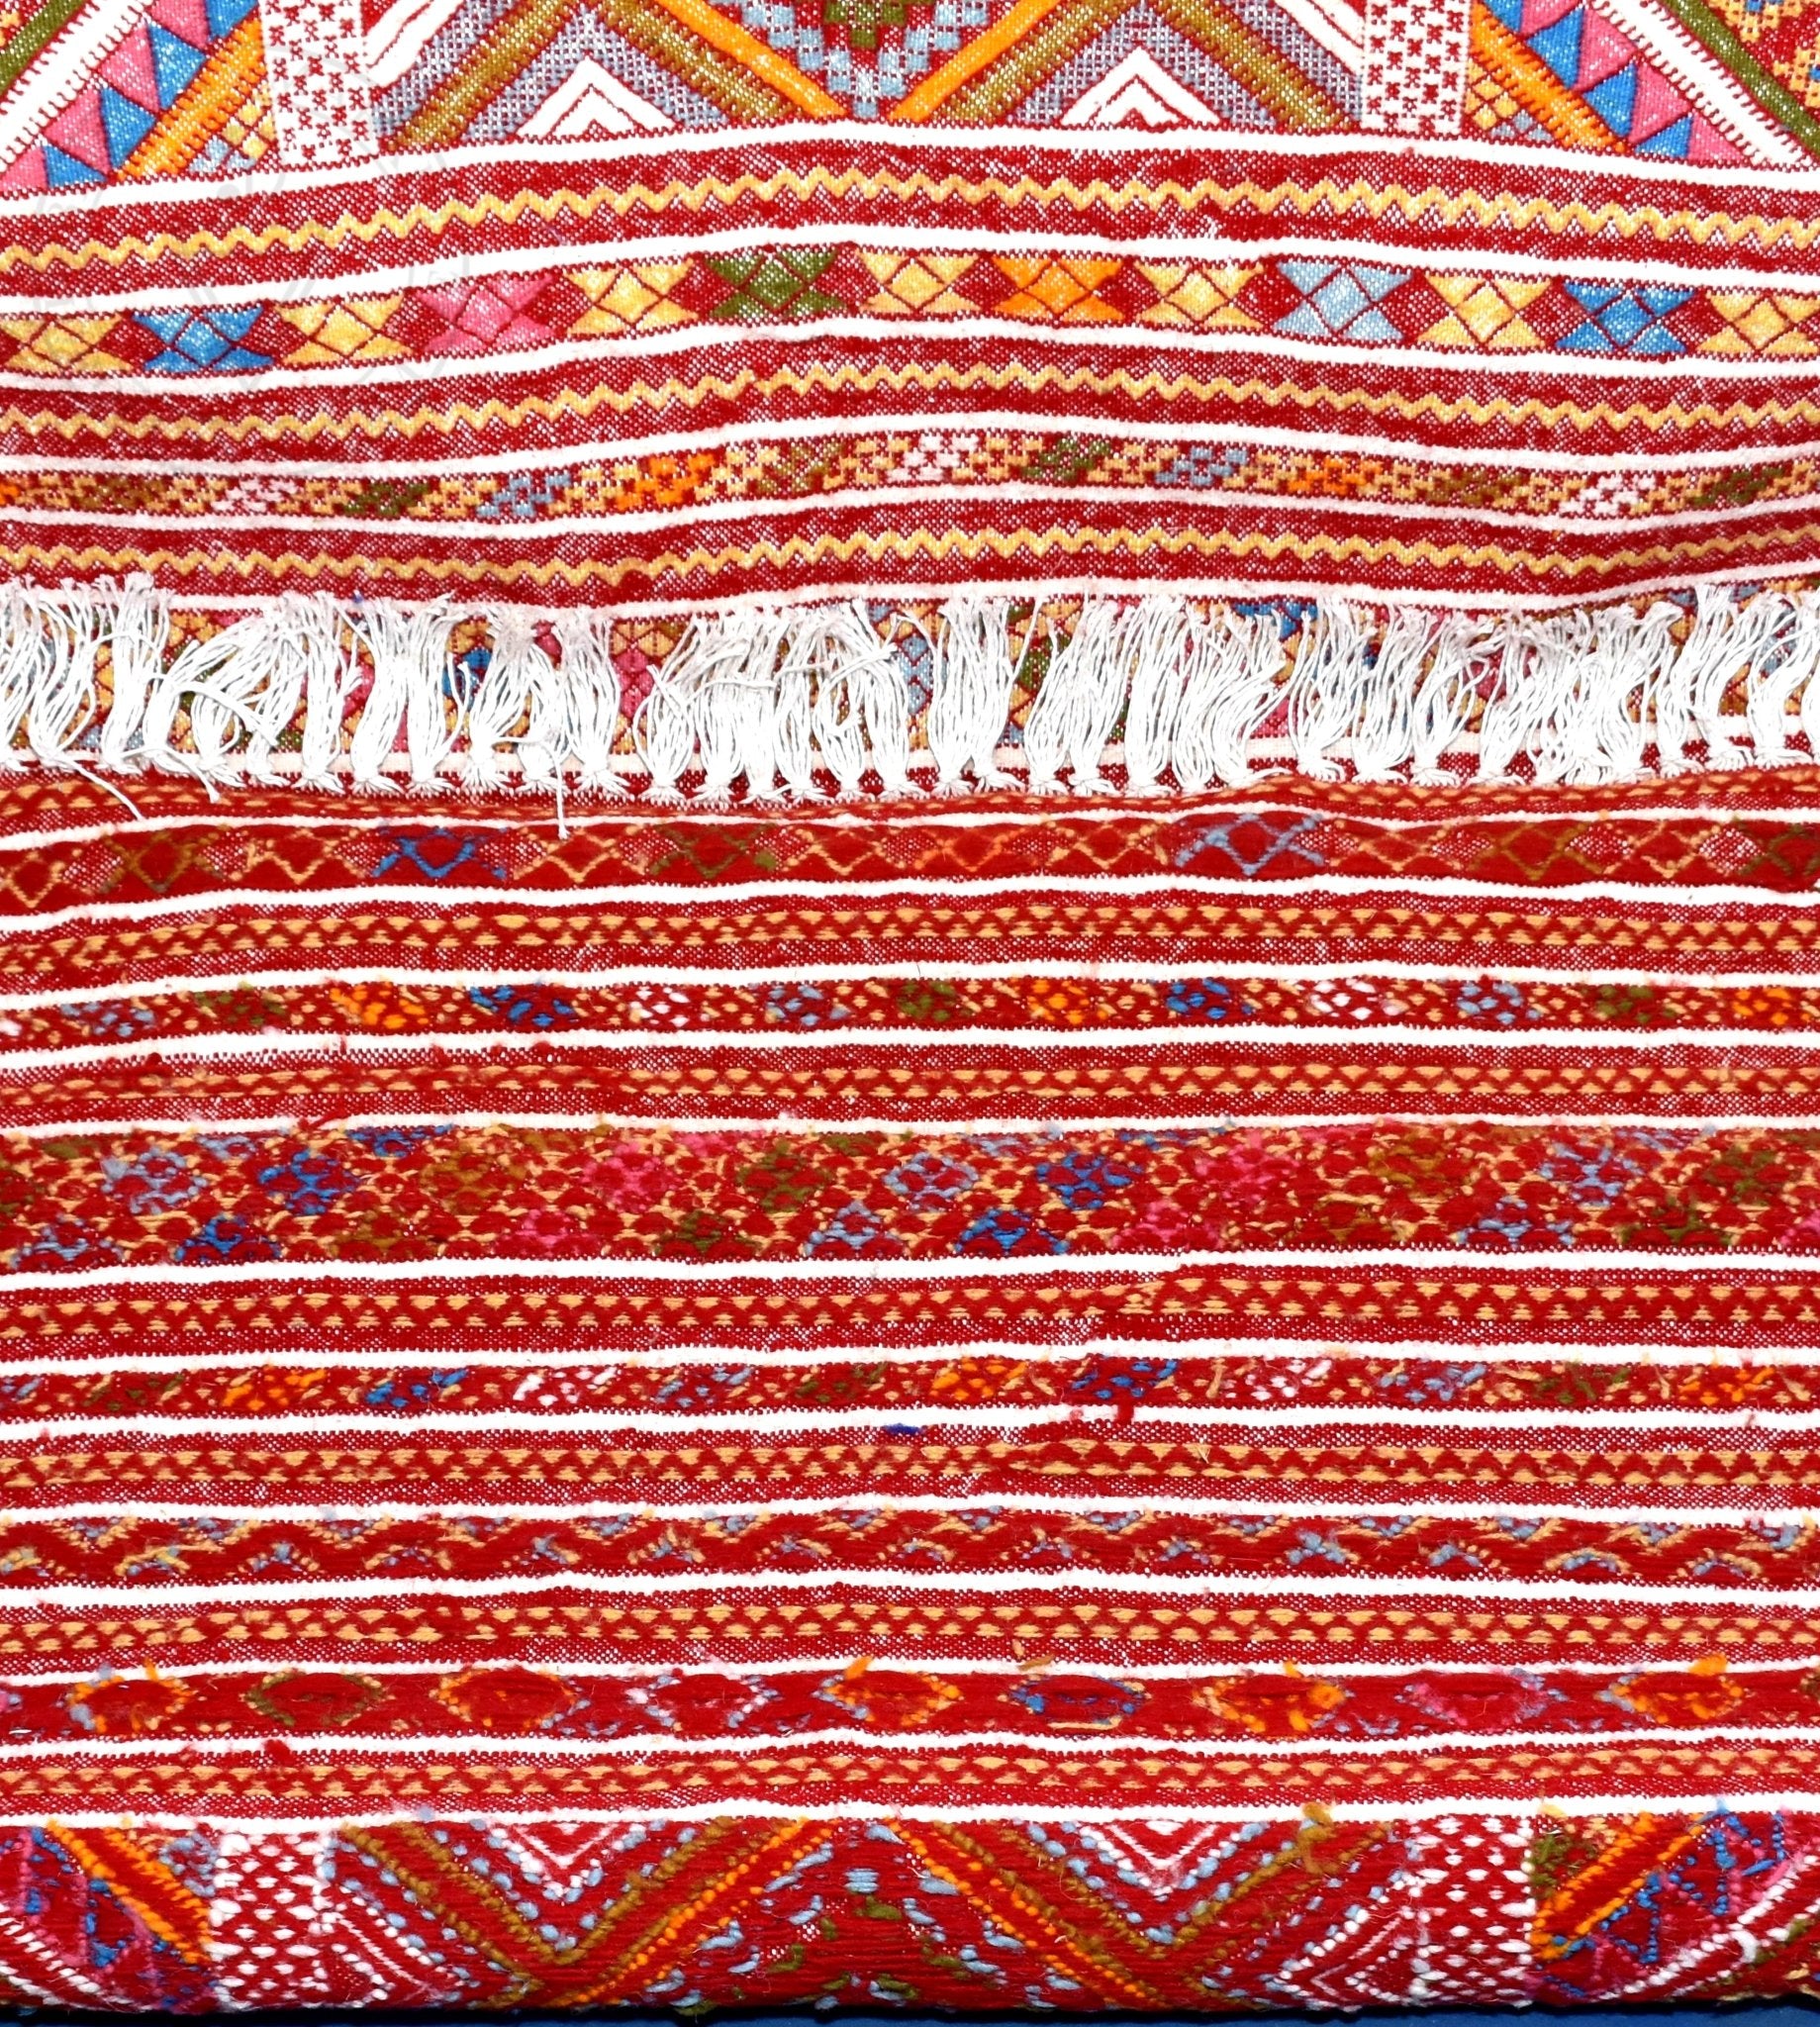 Flatweave kilim hanbal Moroccan rug - 5.42 x 8.37 ft / 165 x 255 cm - Berbers Market